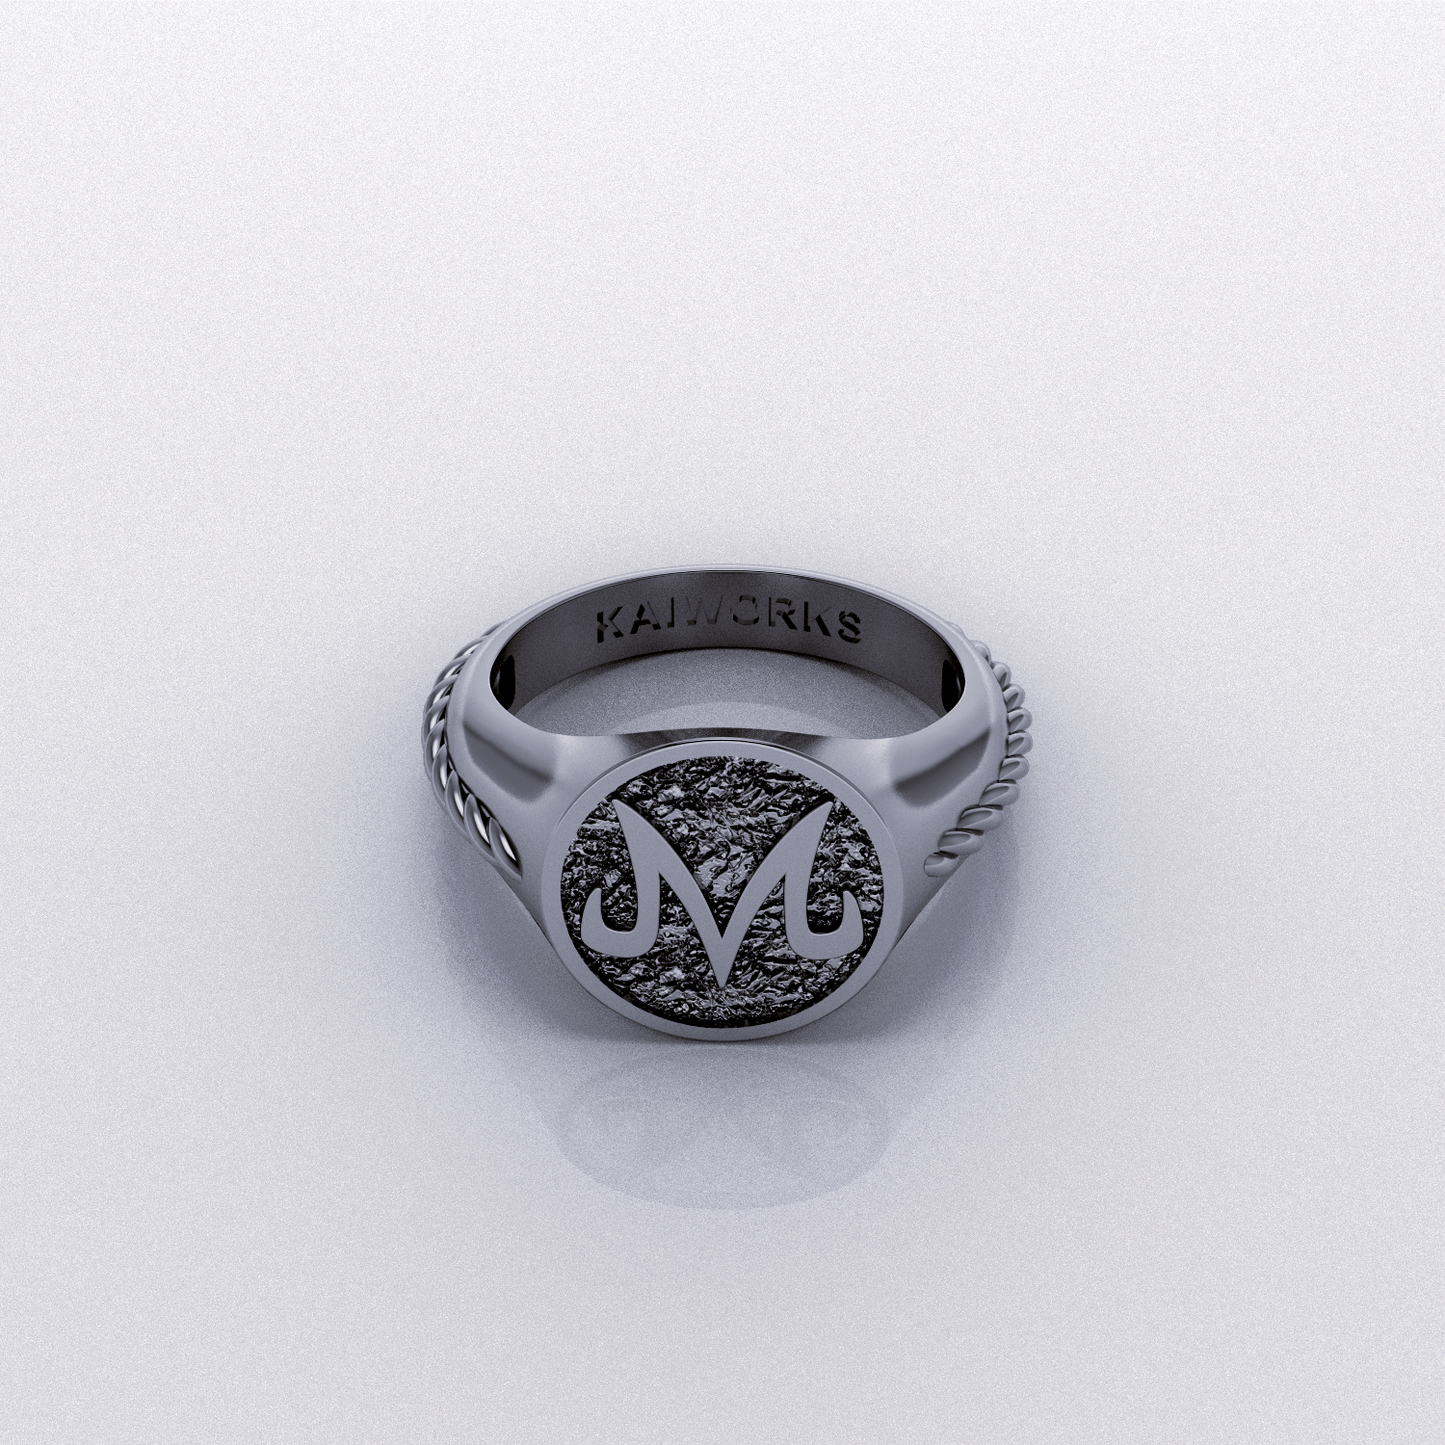 The Majin-M Ring